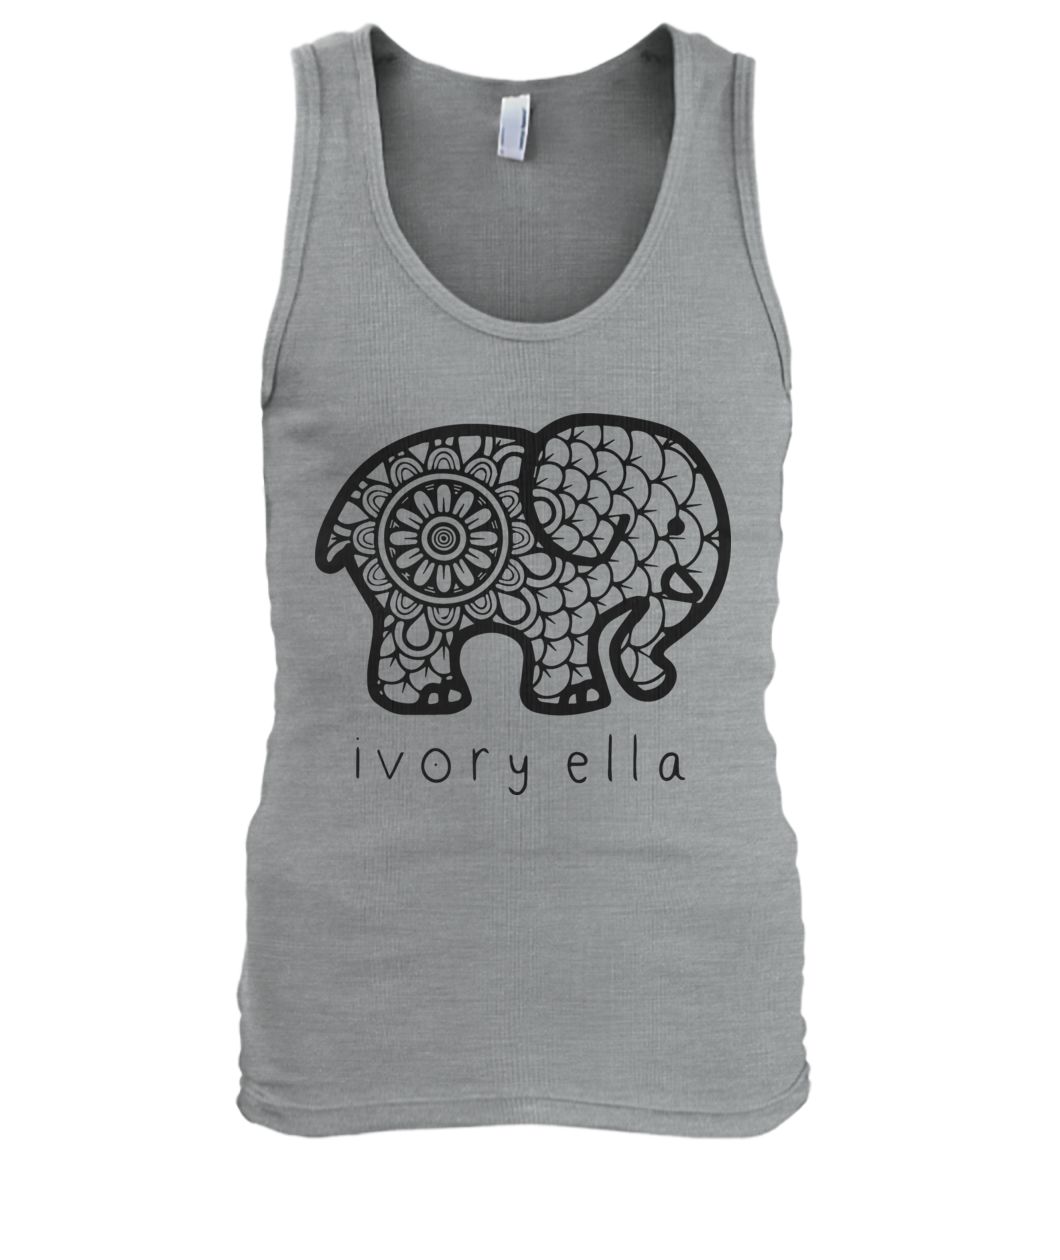 Ivory ella elephant men's tank top